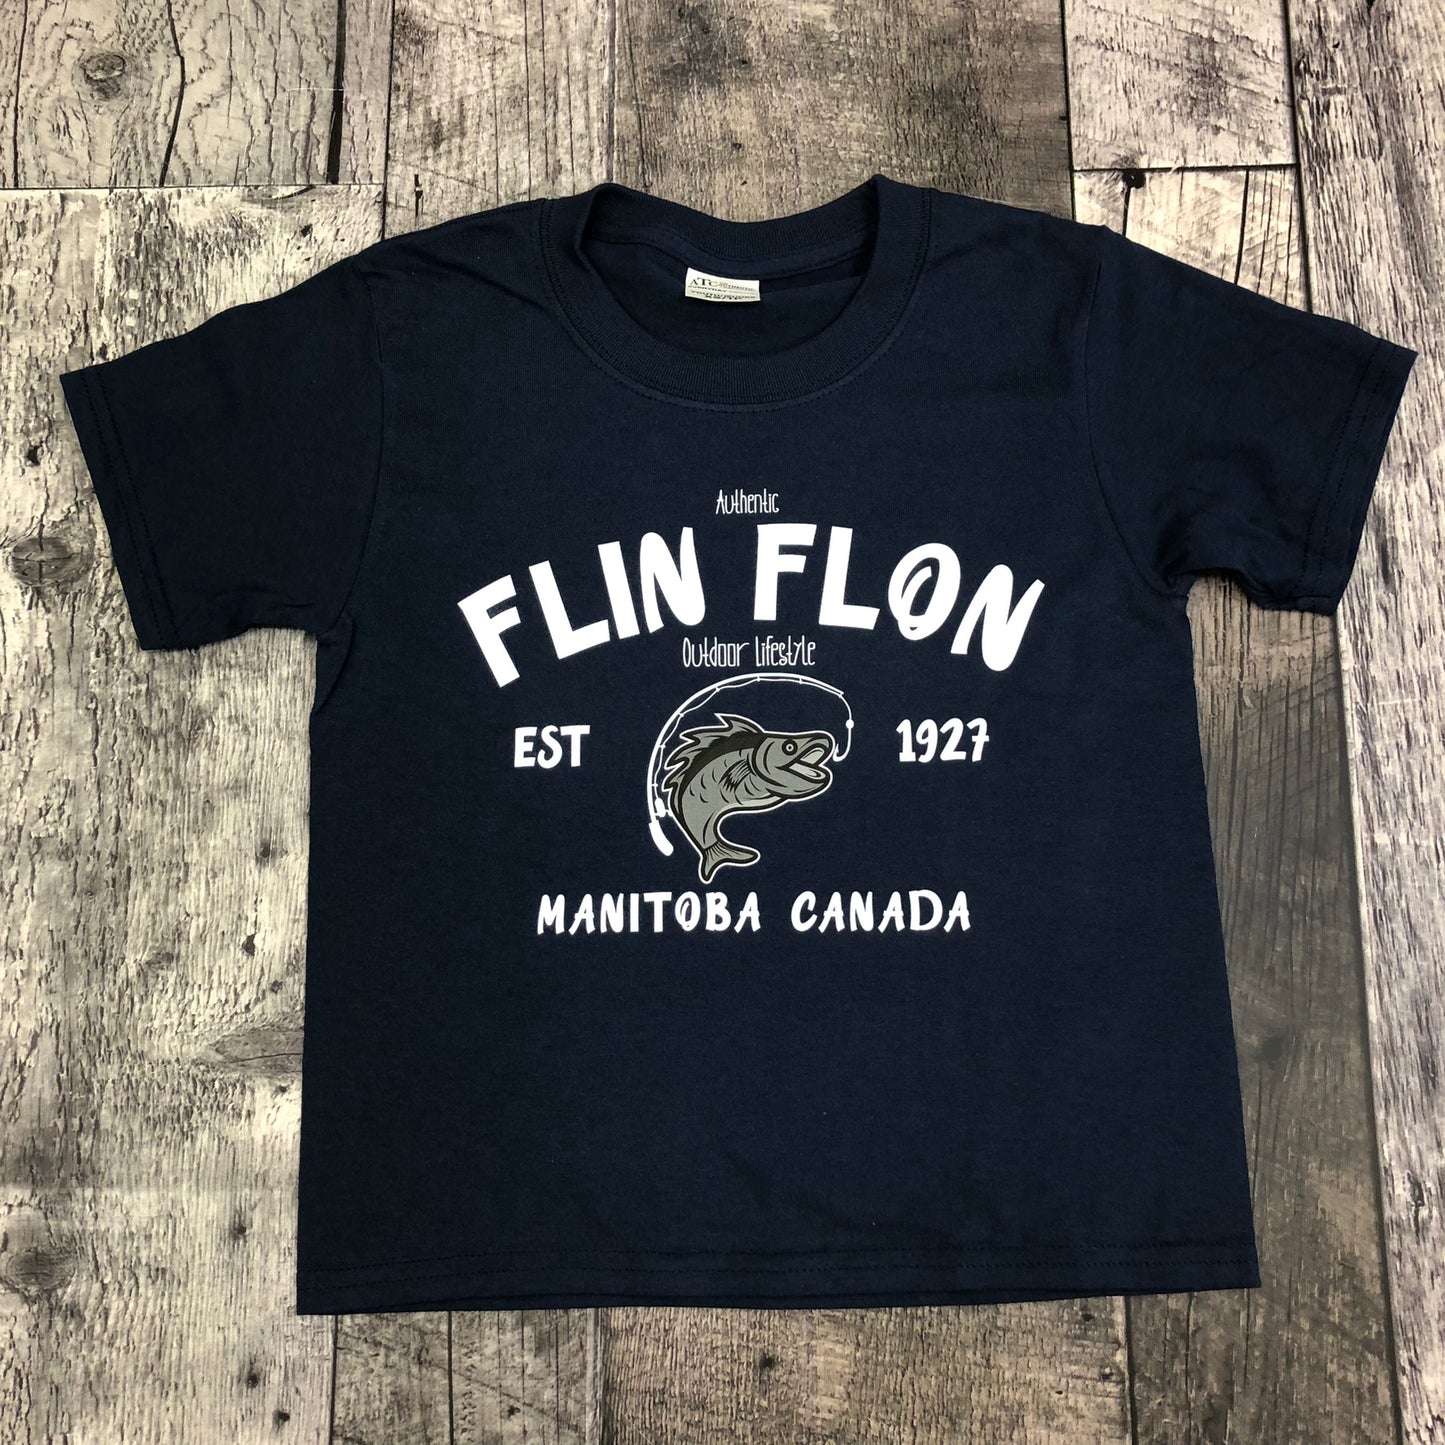 Authentic Flin Flon Fish Youth Tshirt